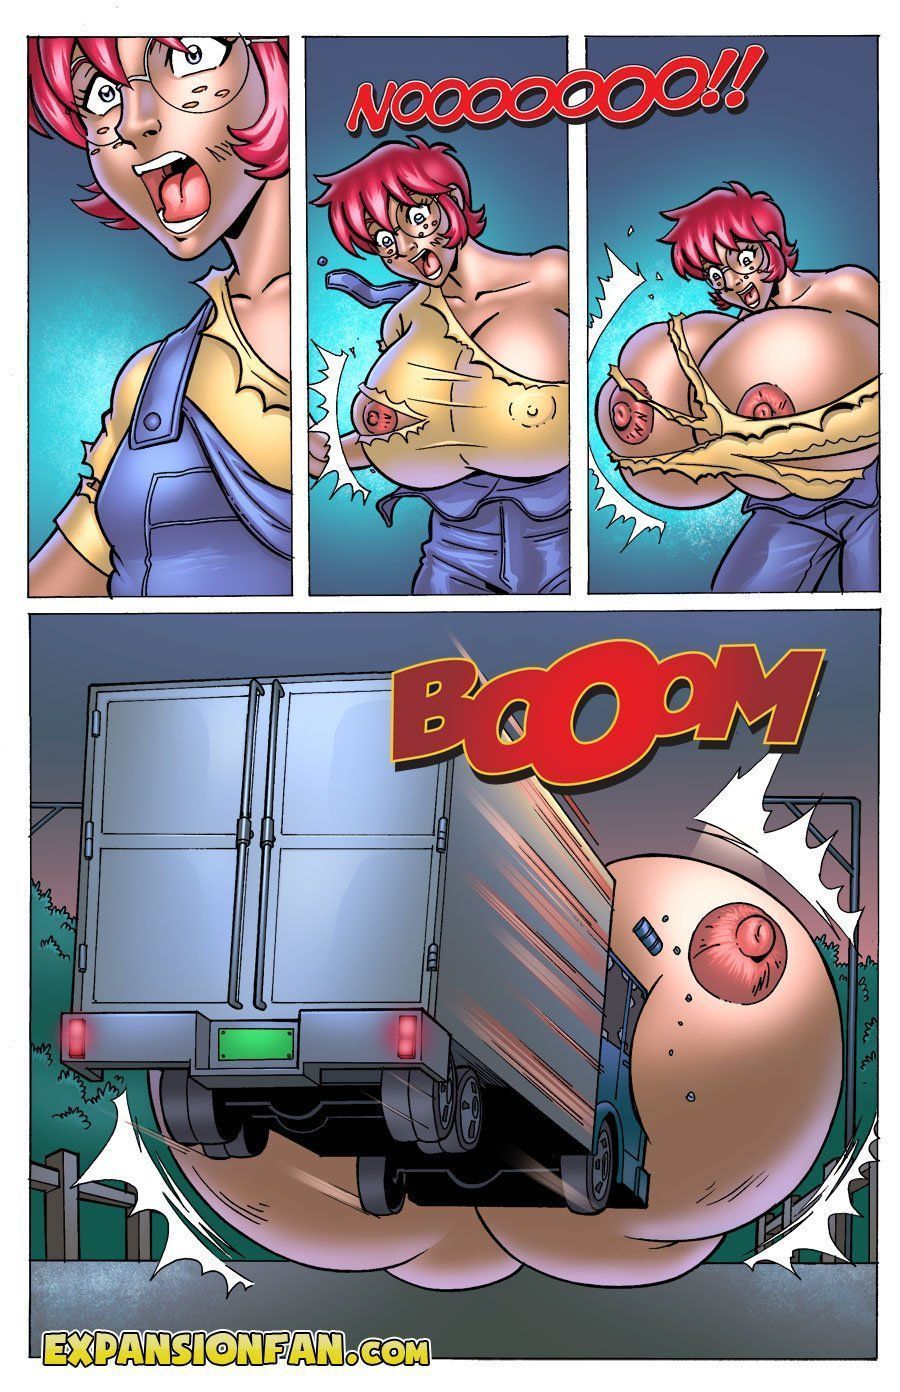 Boob expansion inflation pics comics